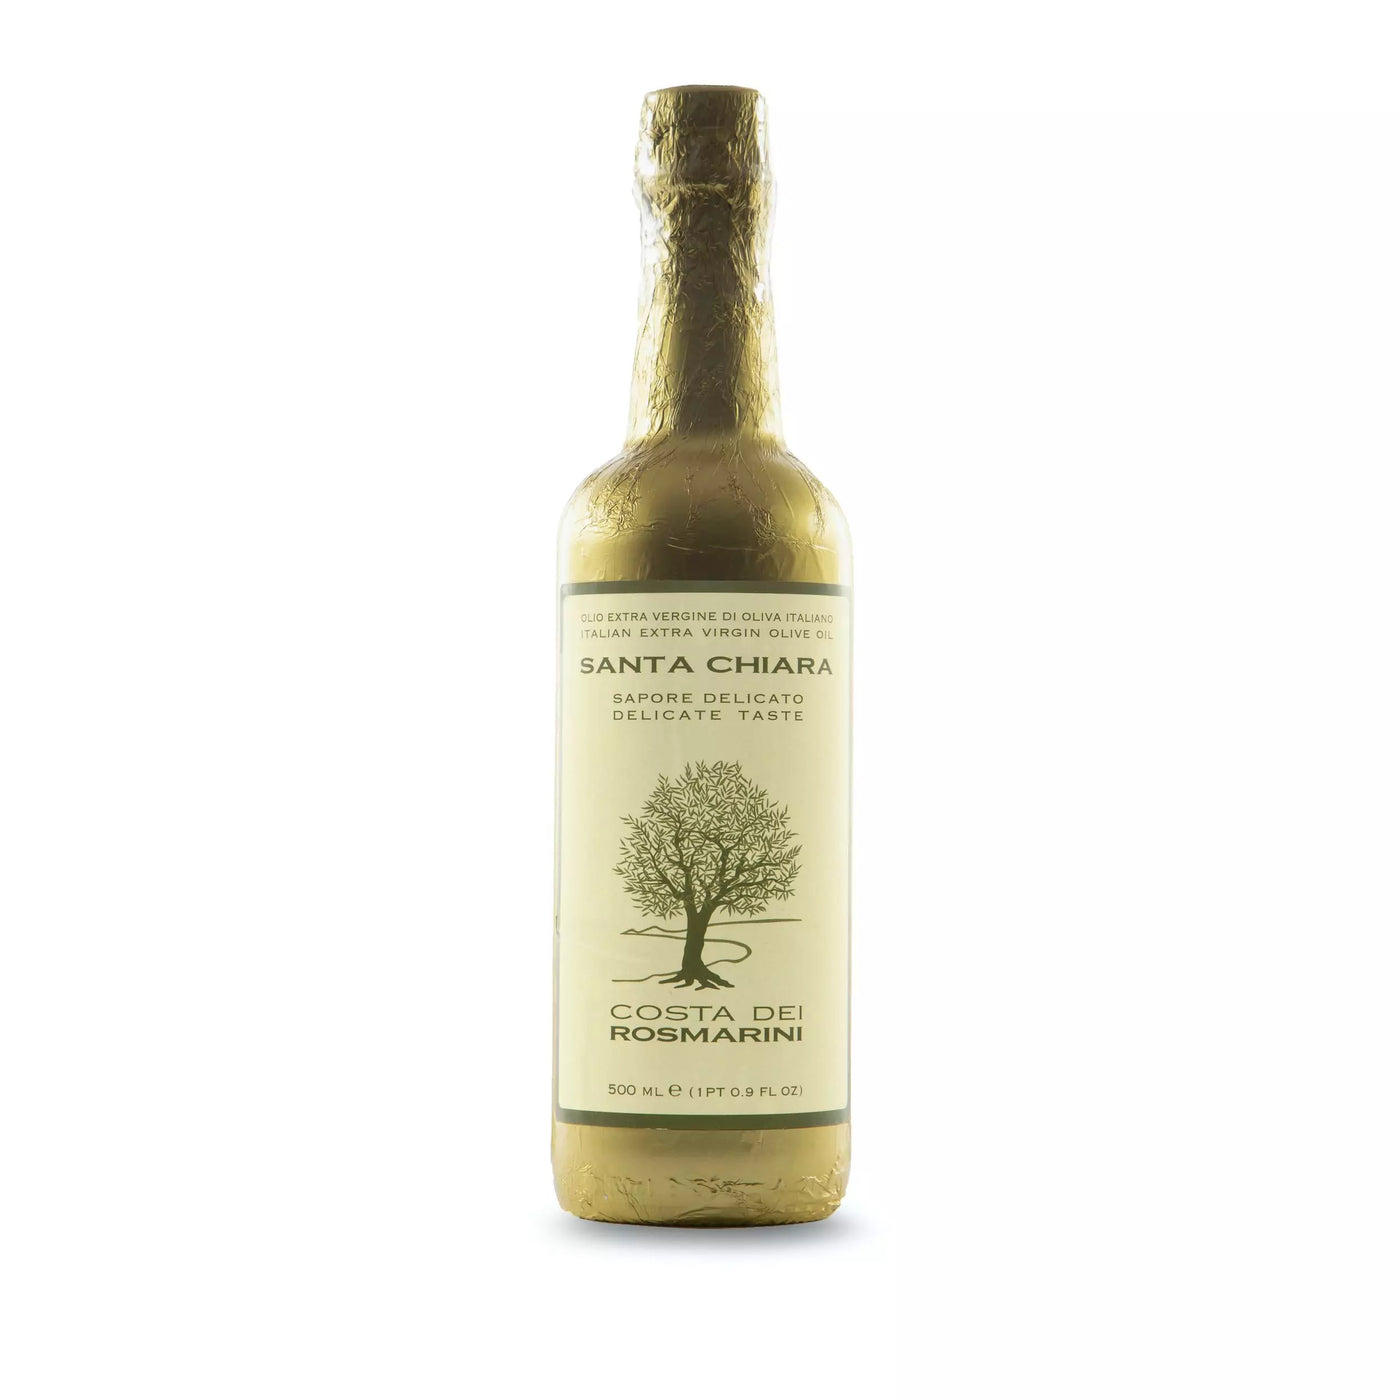 Costa dei Rosmarina Santa Chiara, 100% Ligurian Extra Virgin Olive Oil, 26 oz